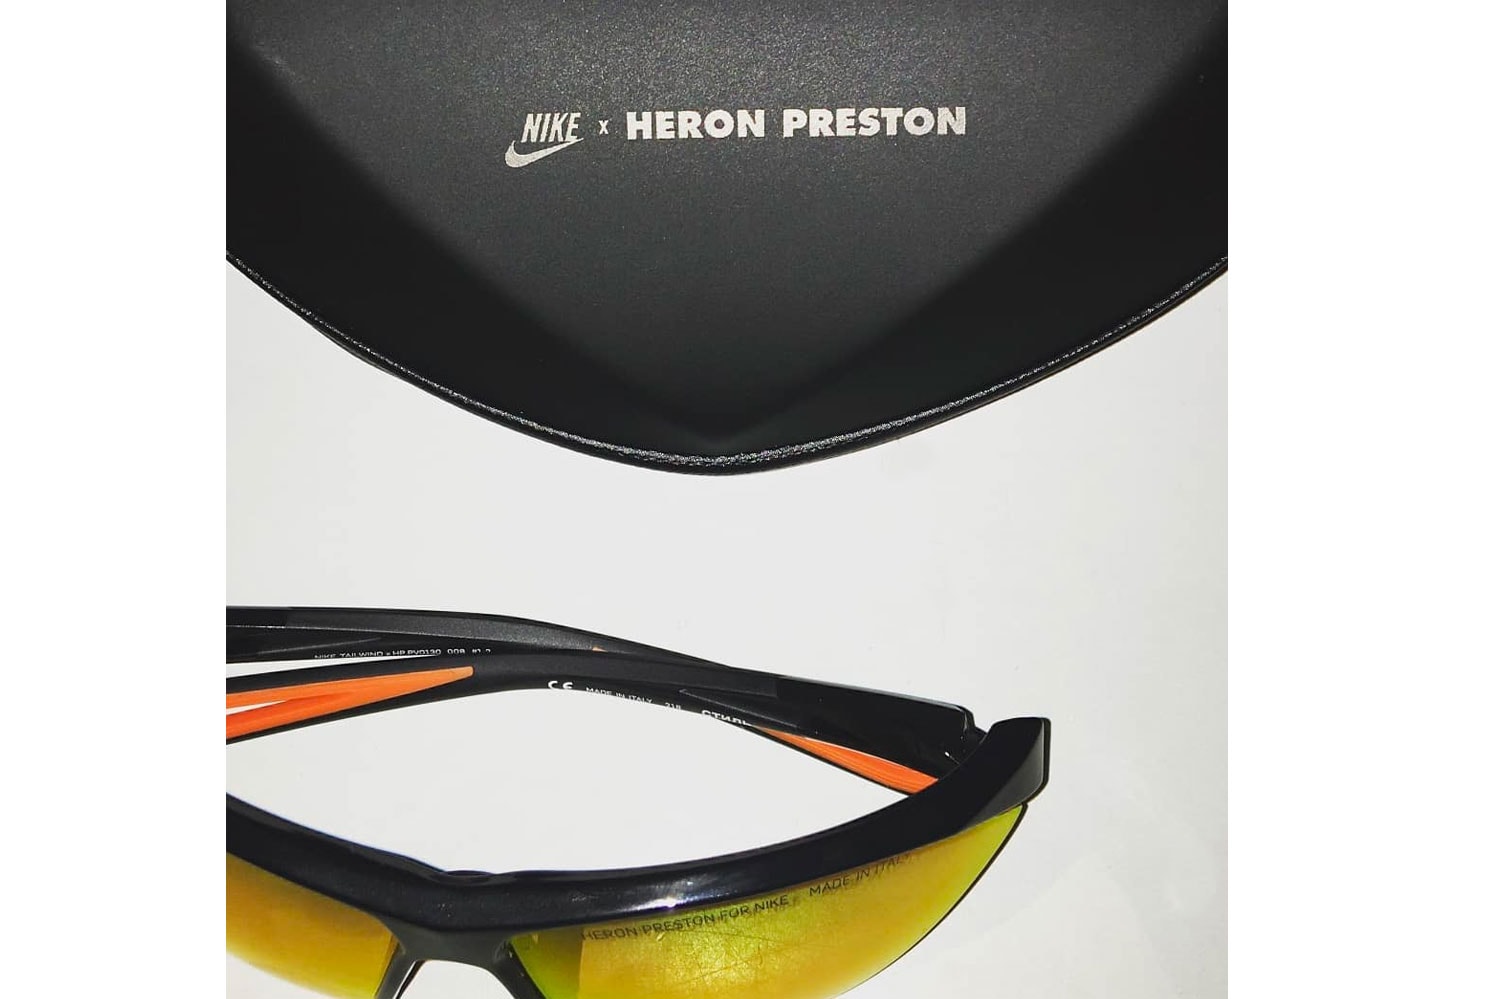 Heron Preston Nike Tailwind HP Sunglasses Release Date Info Performance